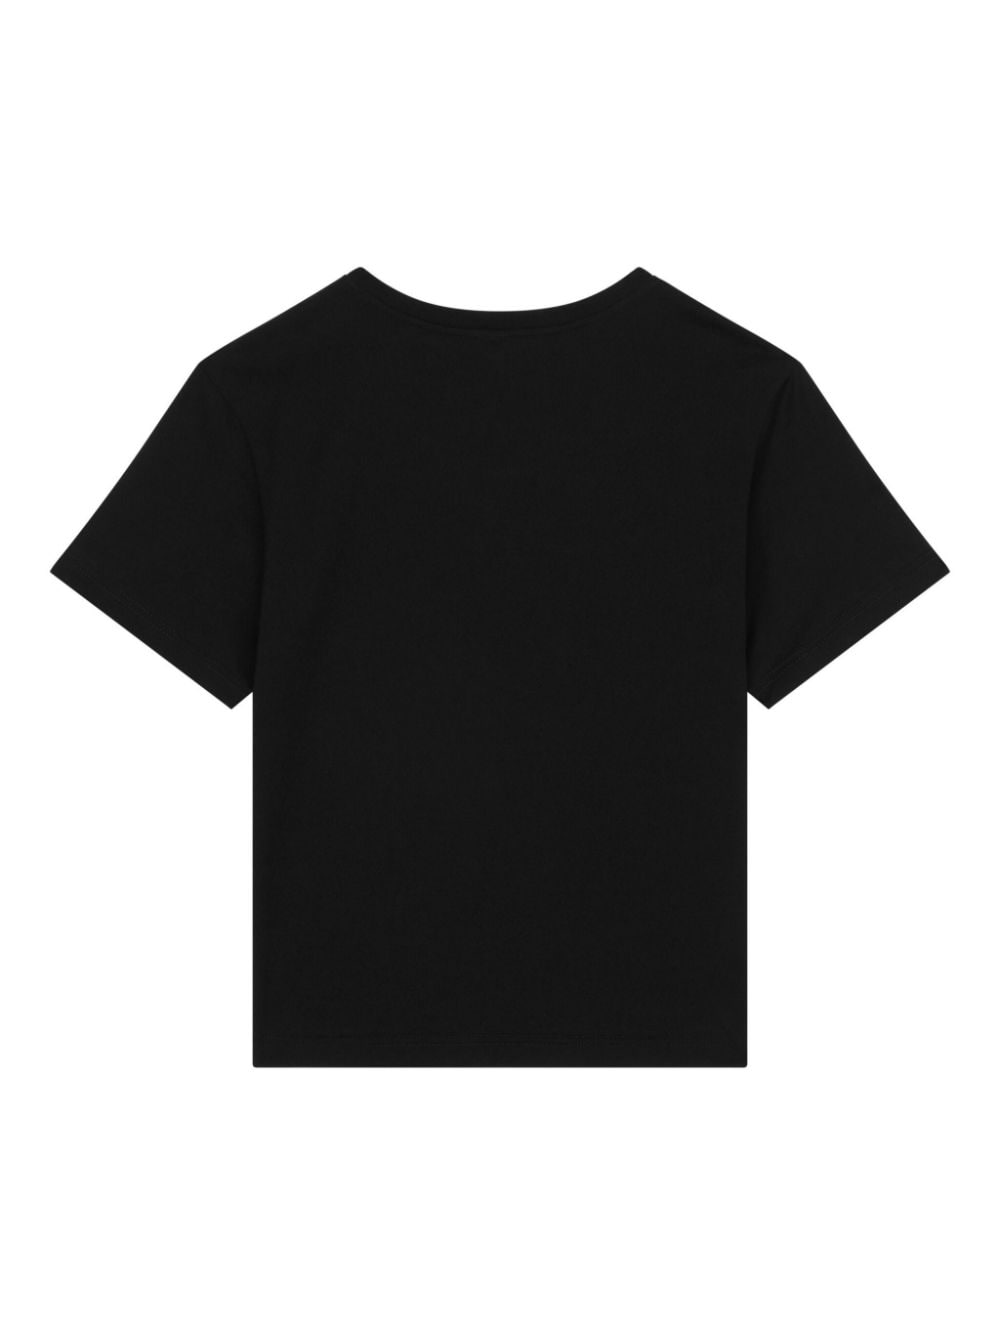 Unisex black cotton t-shirt with logo